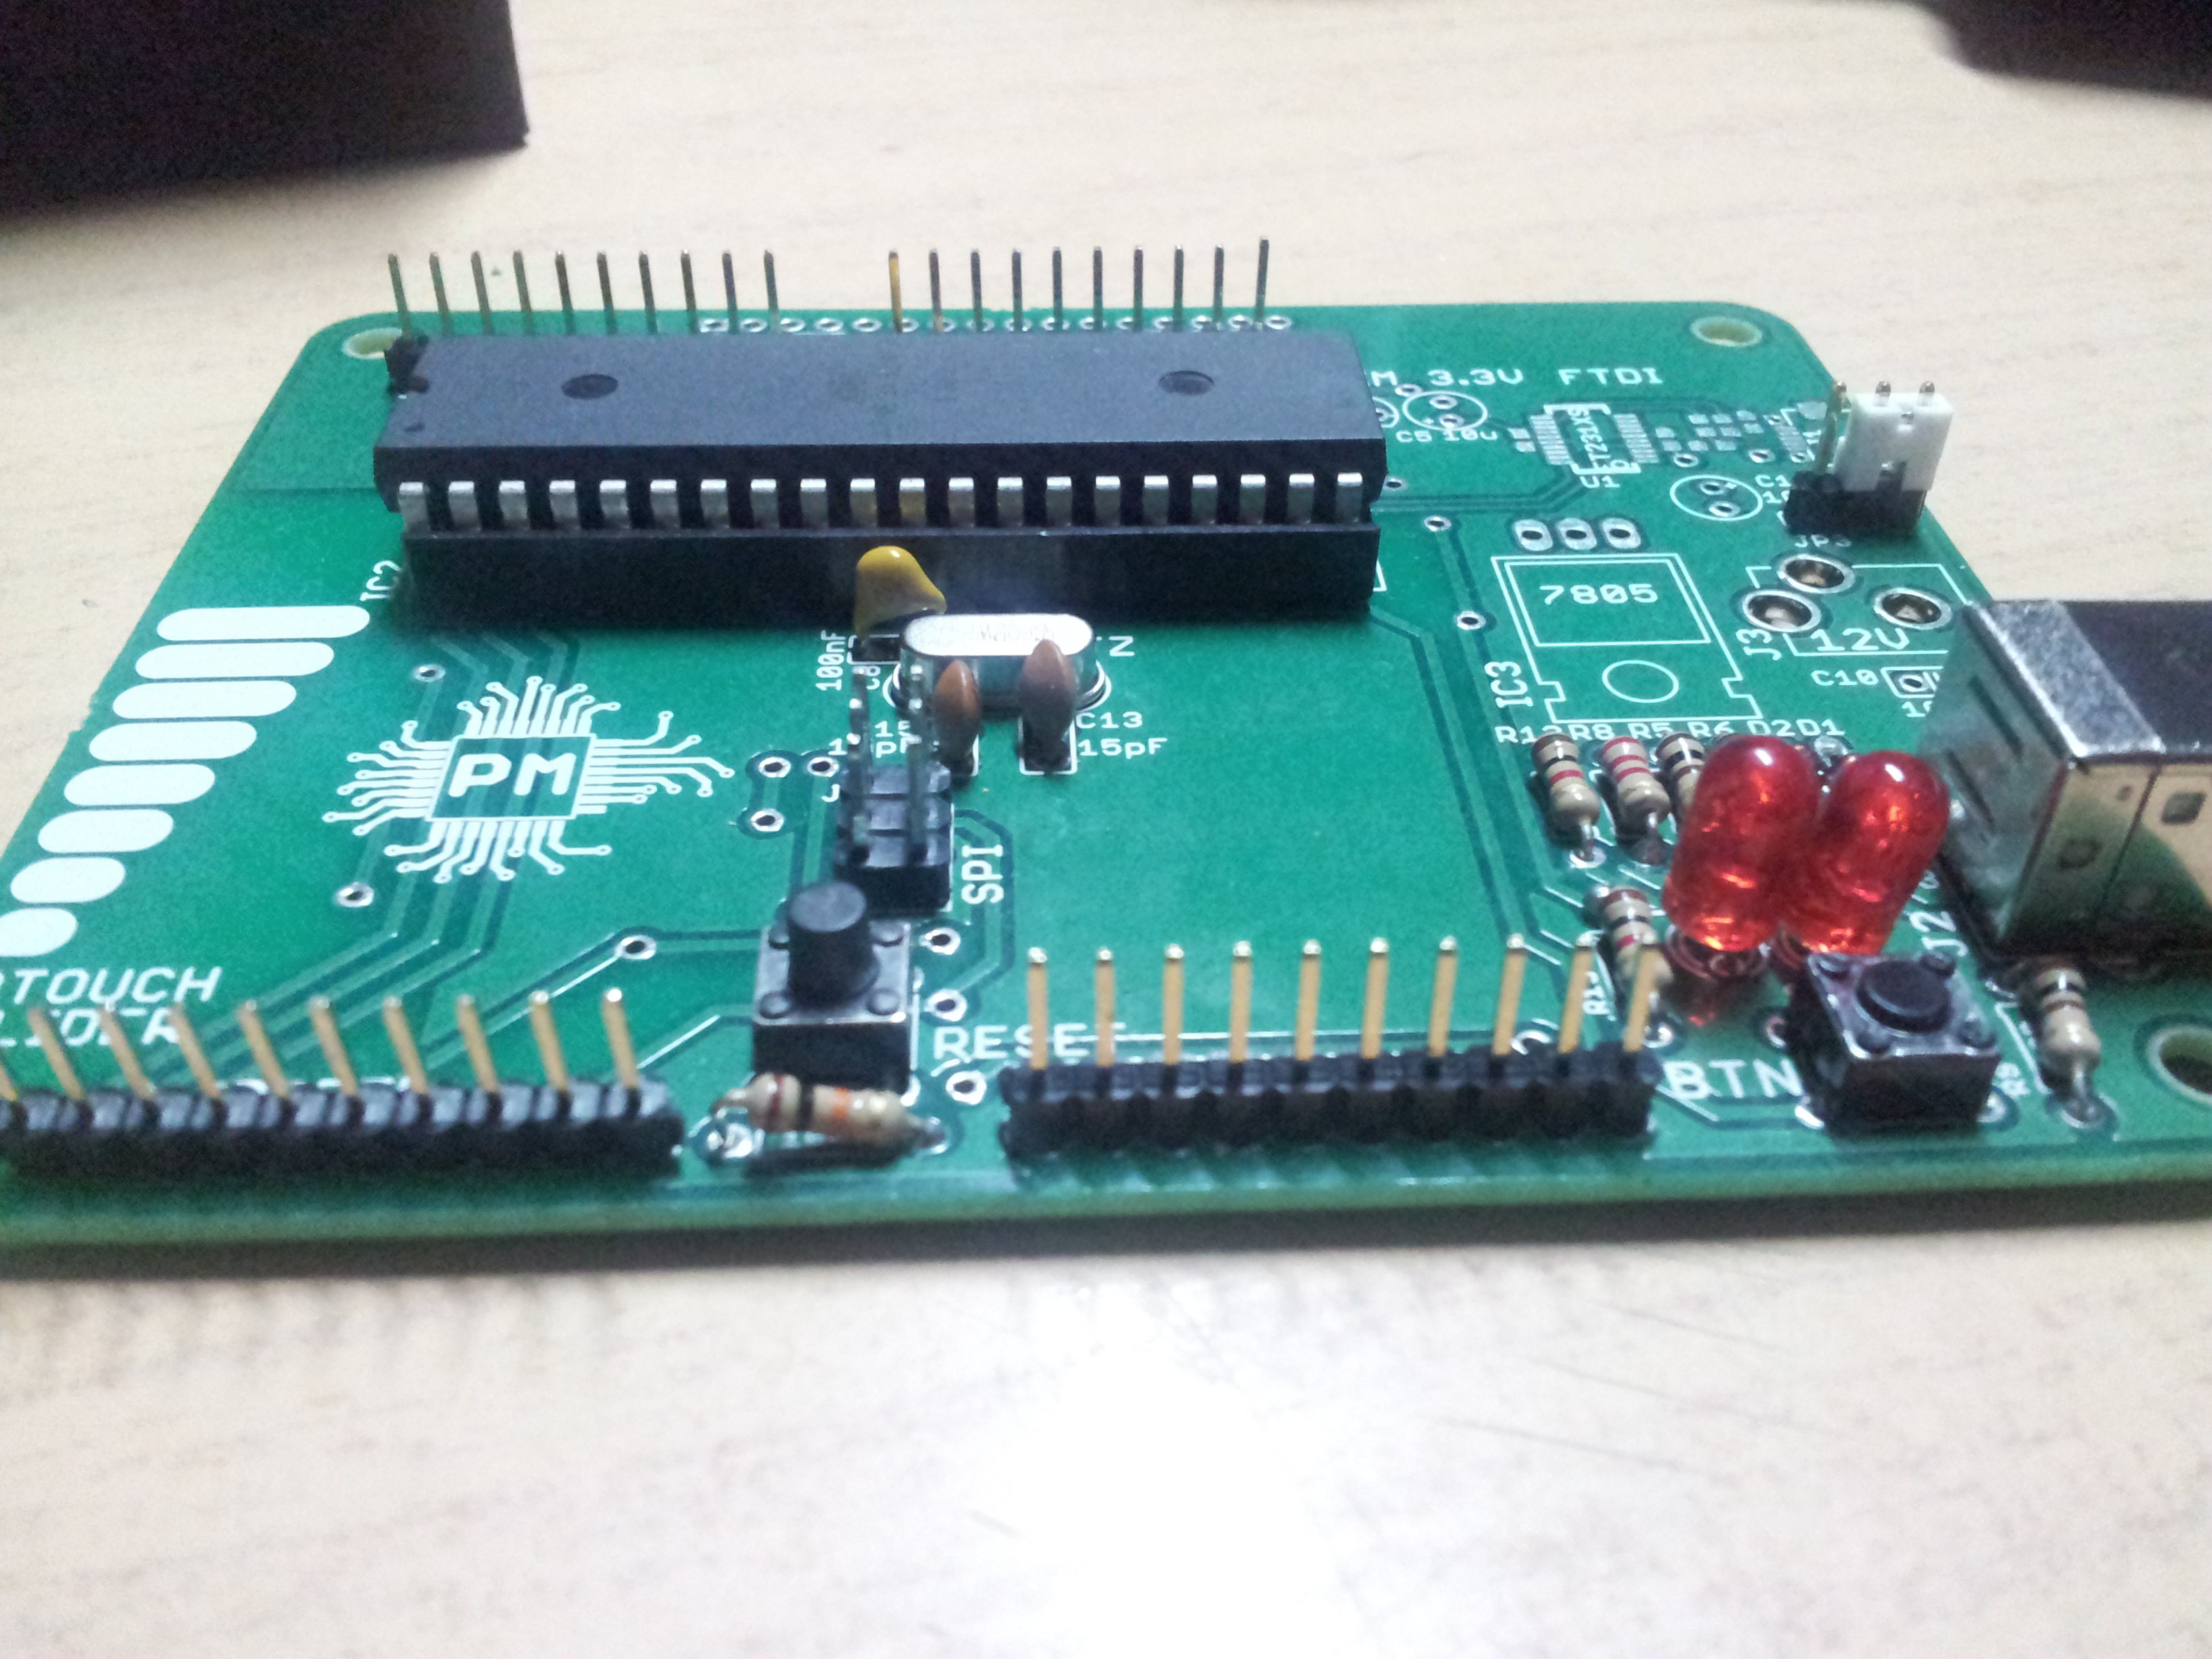 pm:prj2015:fpapa:microcontroller.jpg